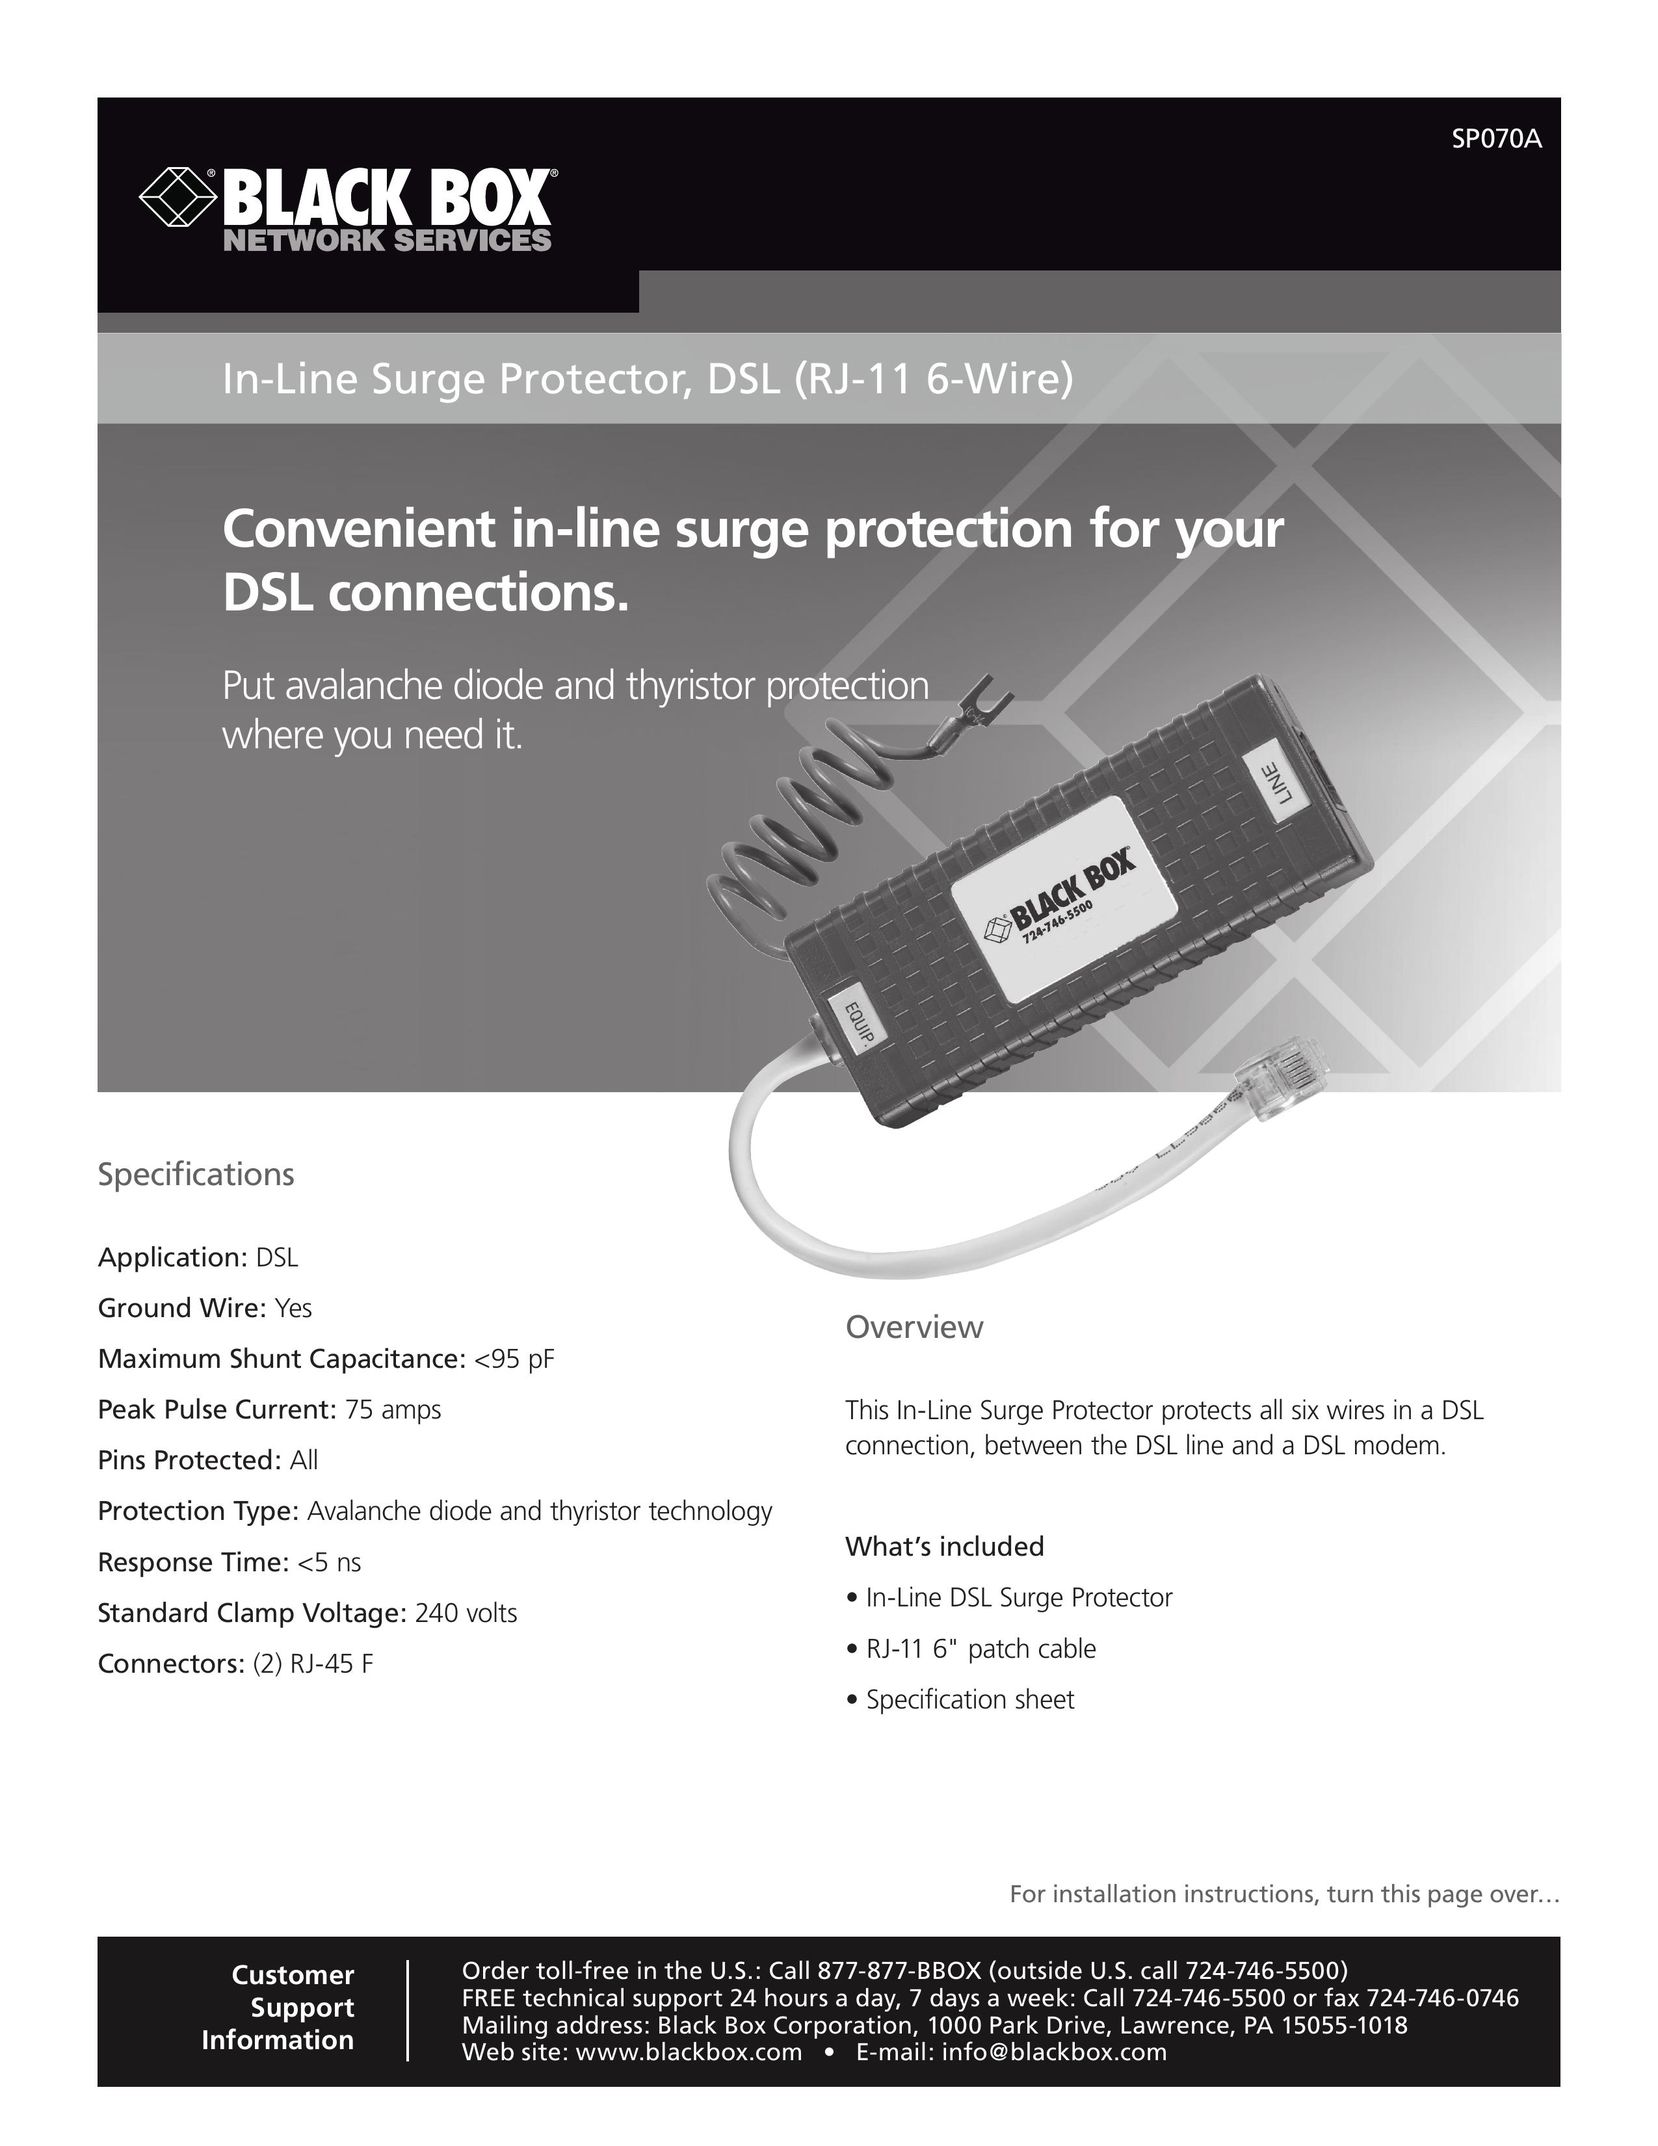 Black Box SP070A Surge Protector User Manual